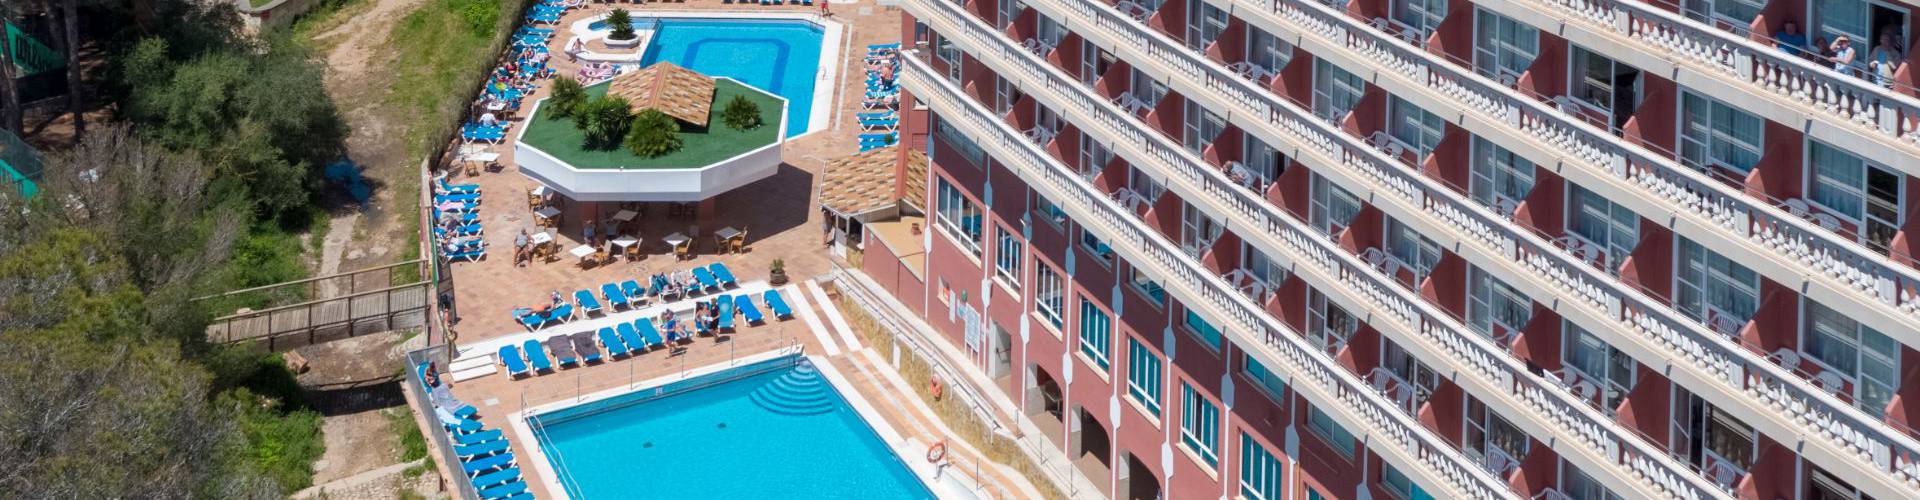 Seramar hotels - S'Arenal - 